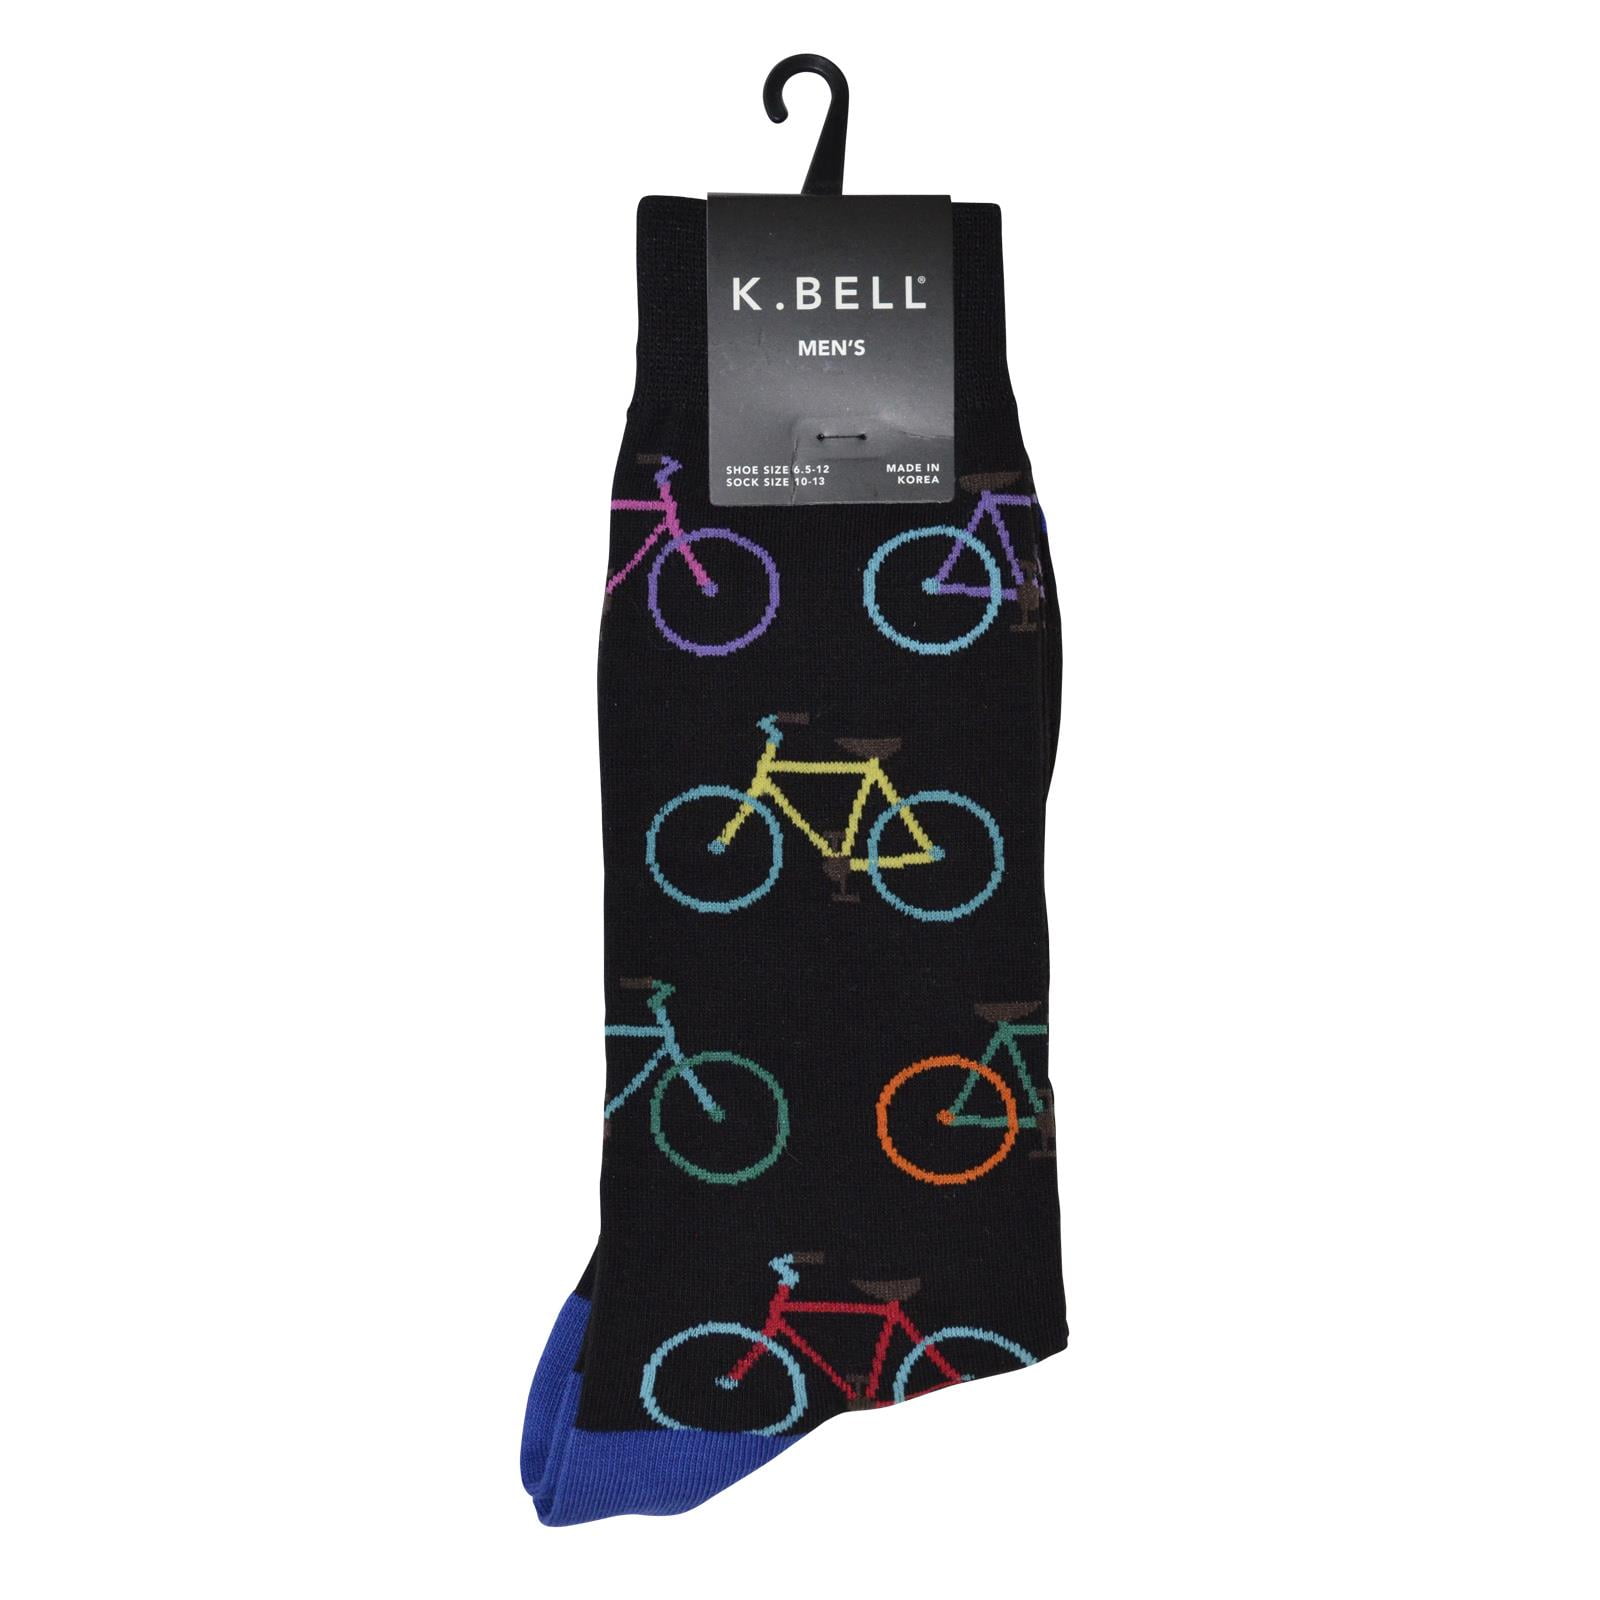 K.Bell Men's Pair Socks Black Bright Bicycles Cotton Blend Mens Socks NWT 